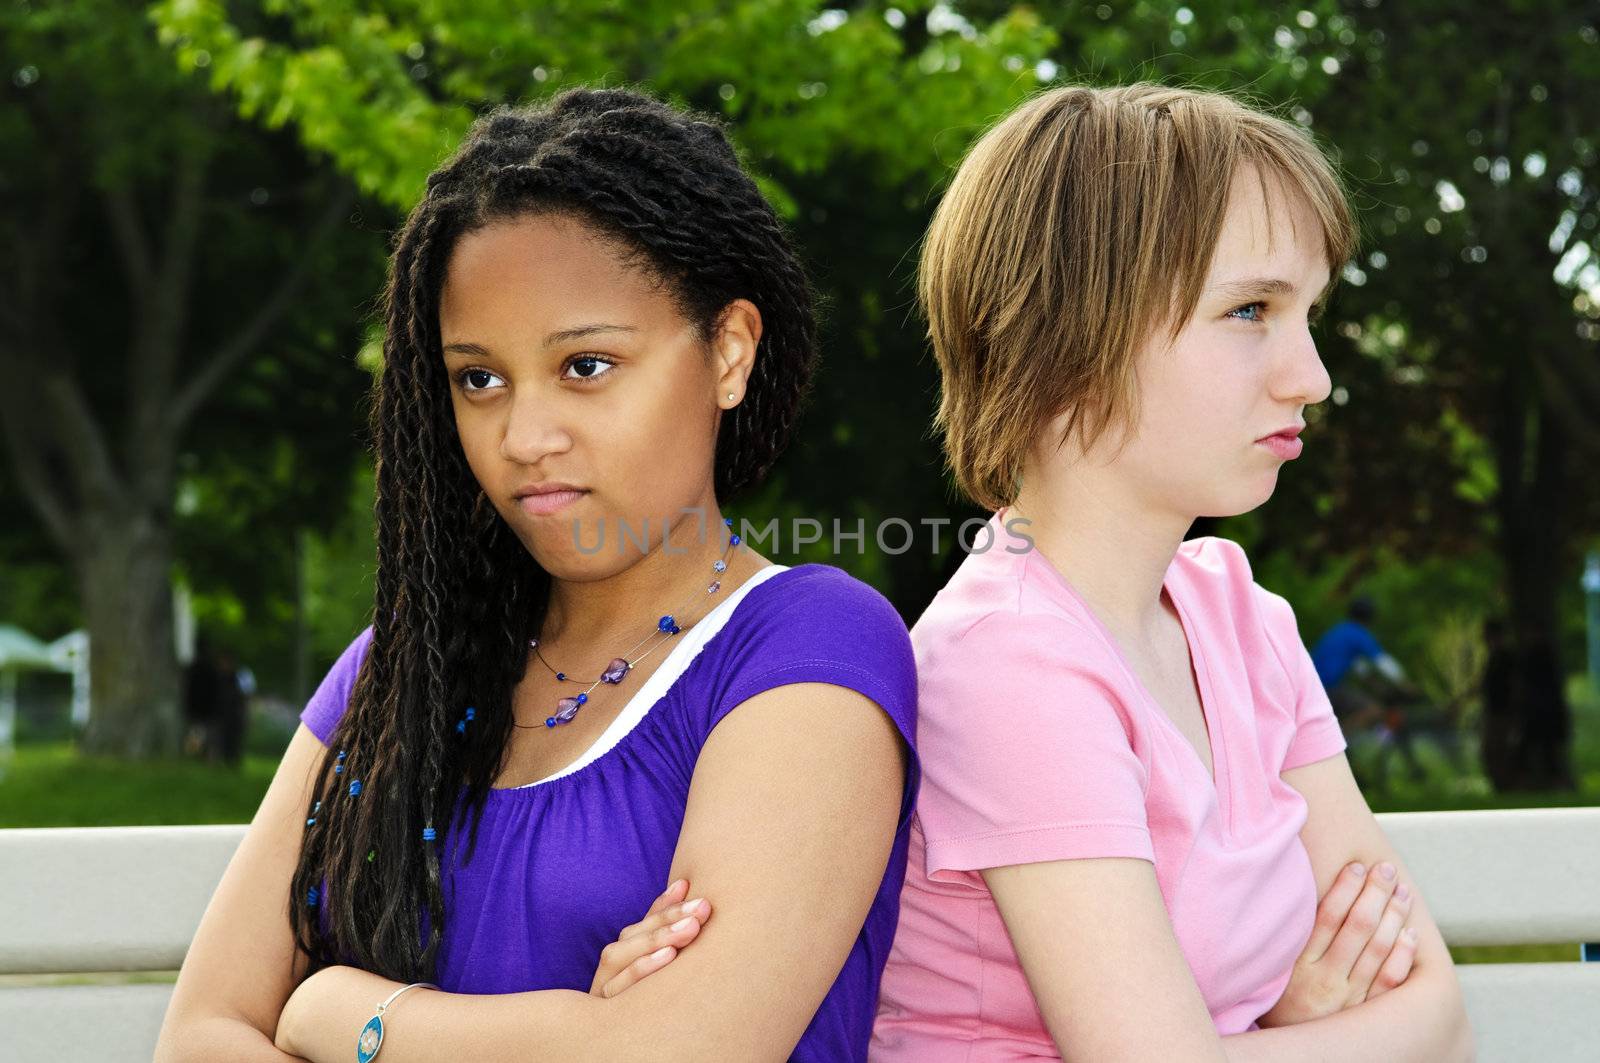 Angry teenage girls by elenathewise